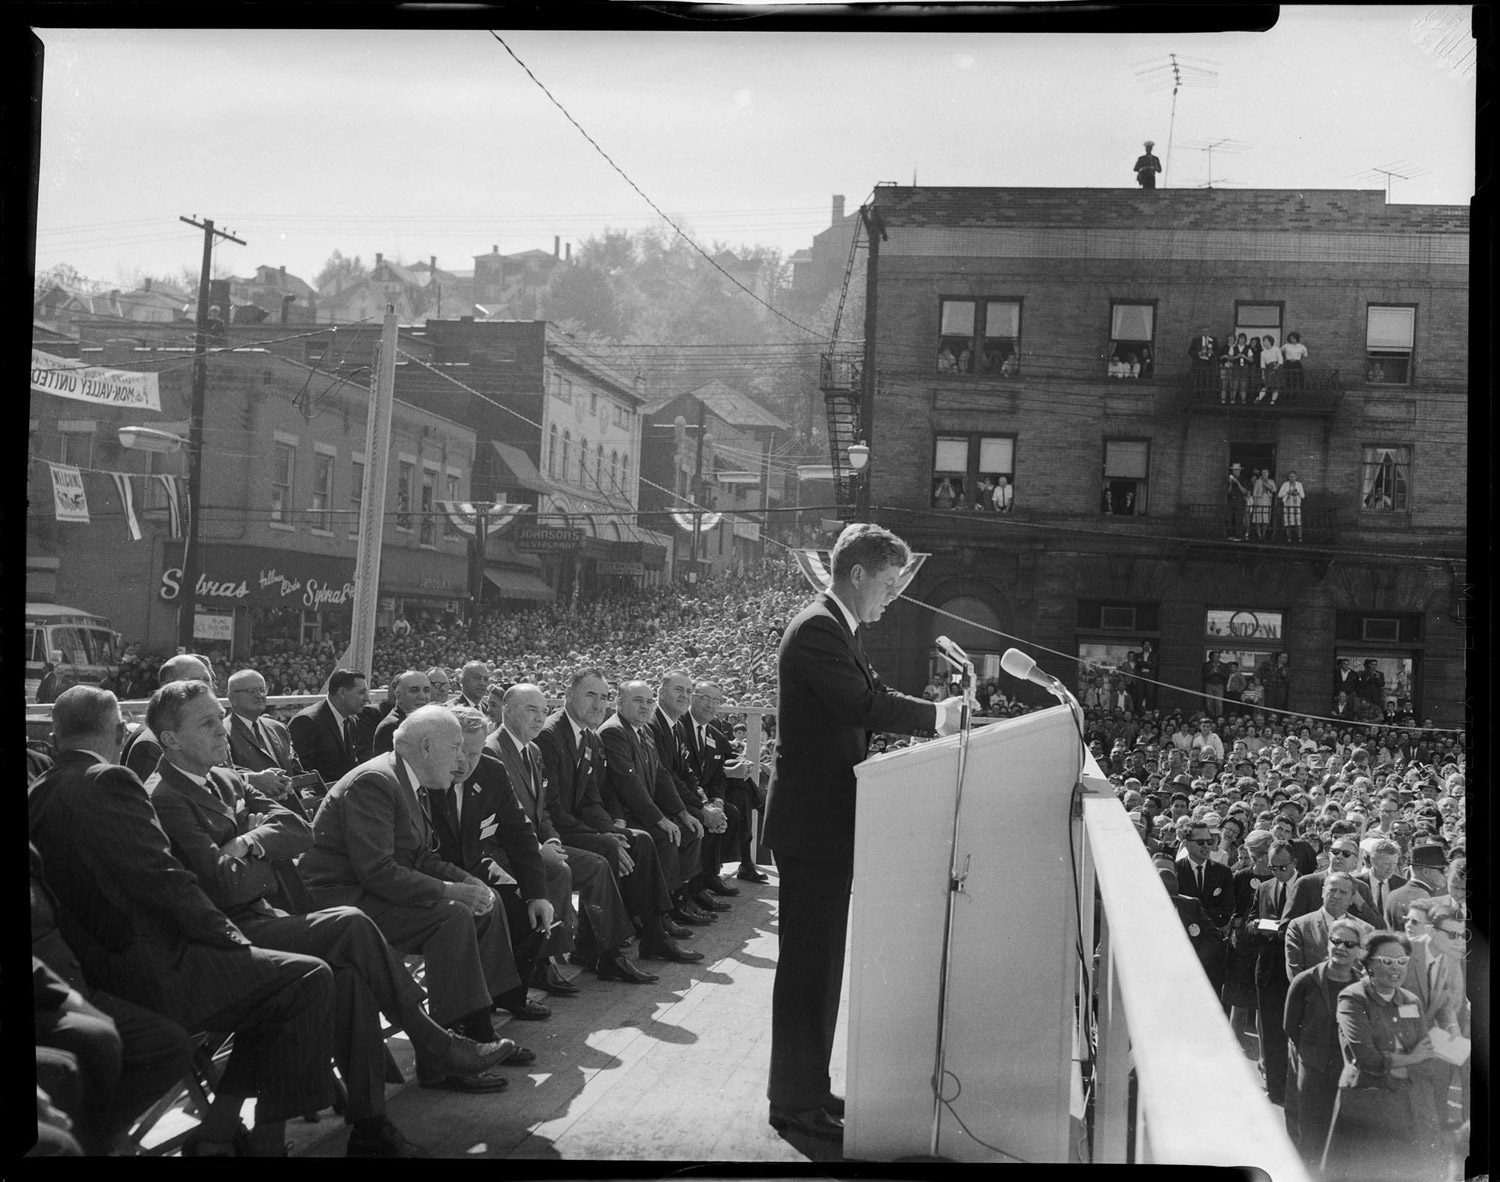 President John F. Kennedy speaking at a podium in Monessen, Pennsylvania, Oct. 13, 1962.